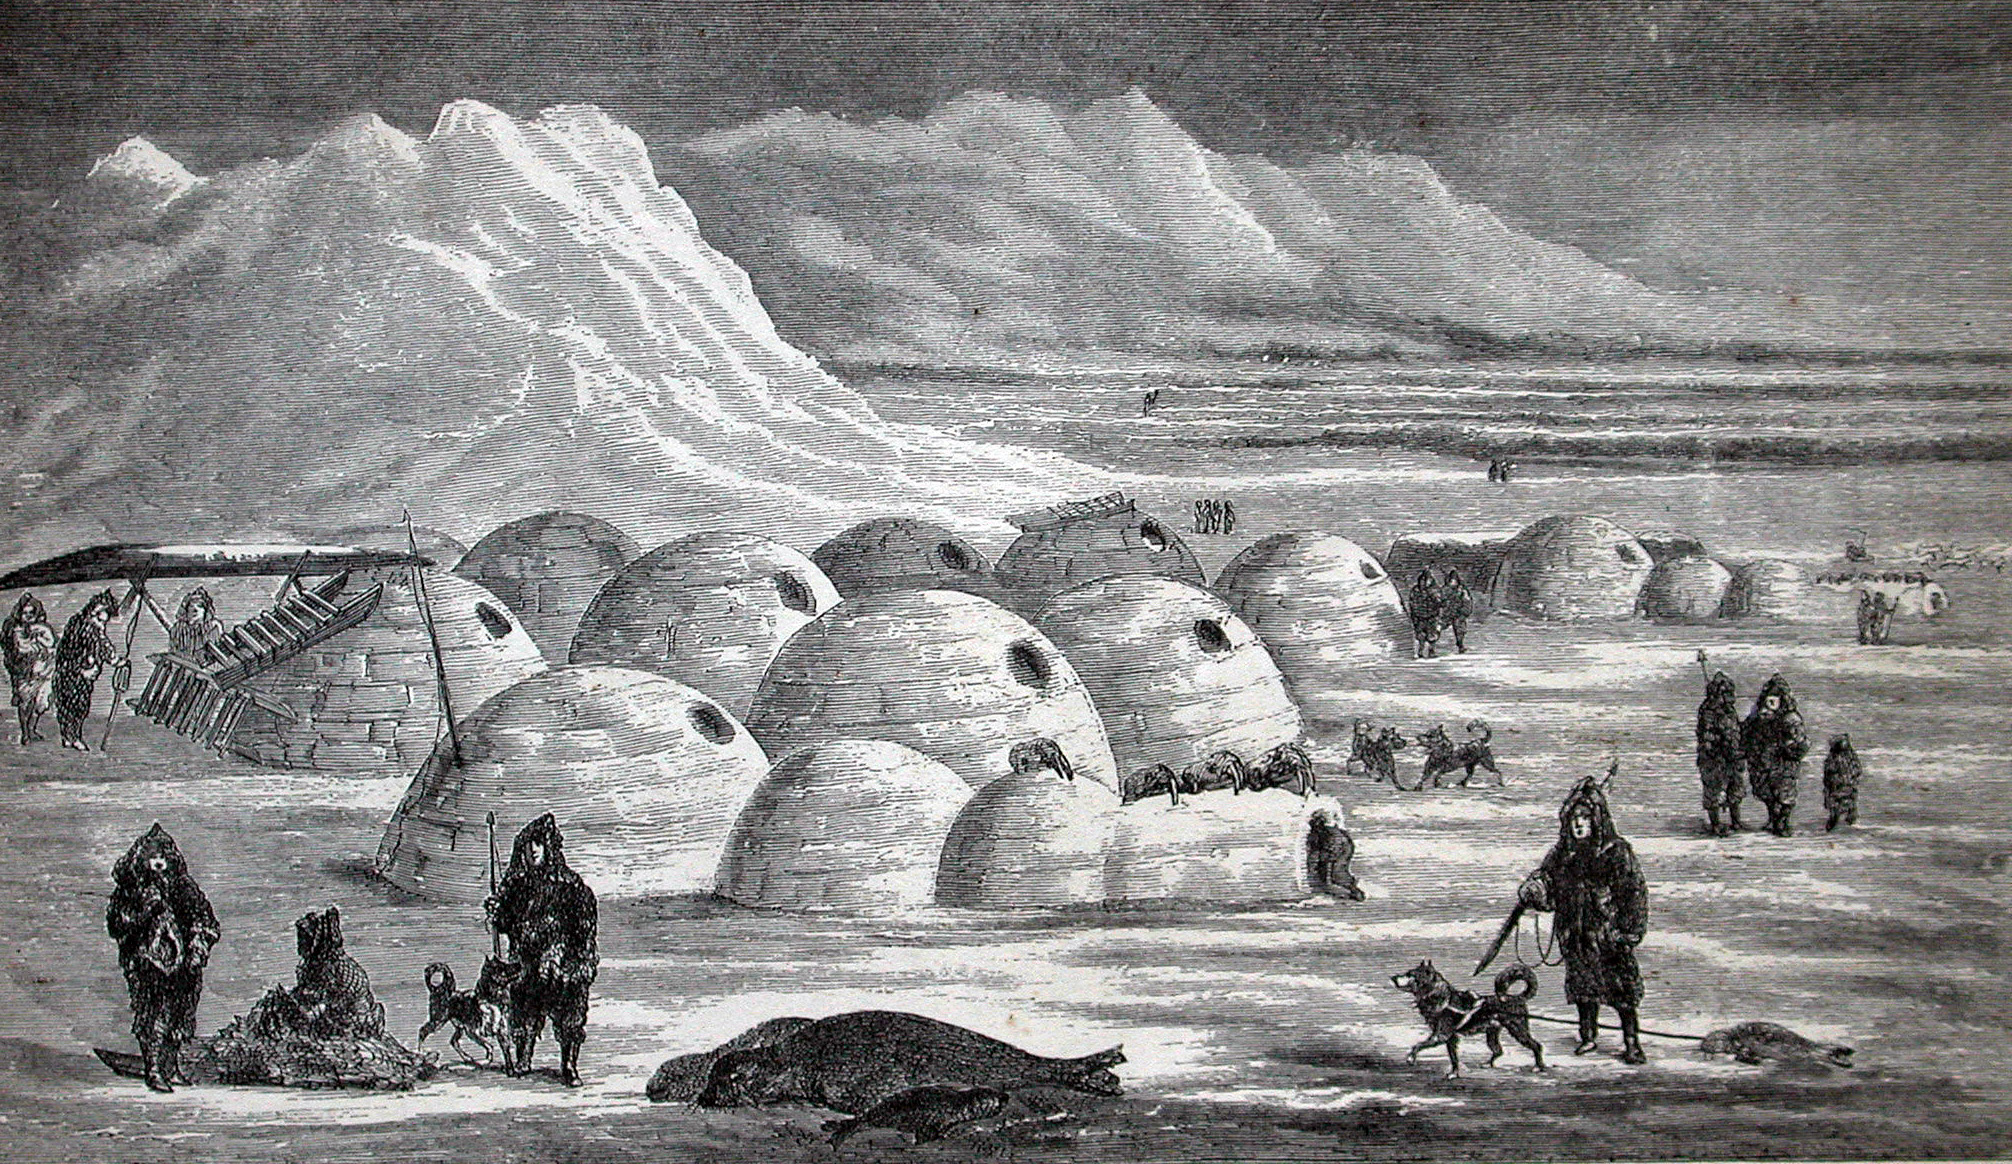 Inuit Village